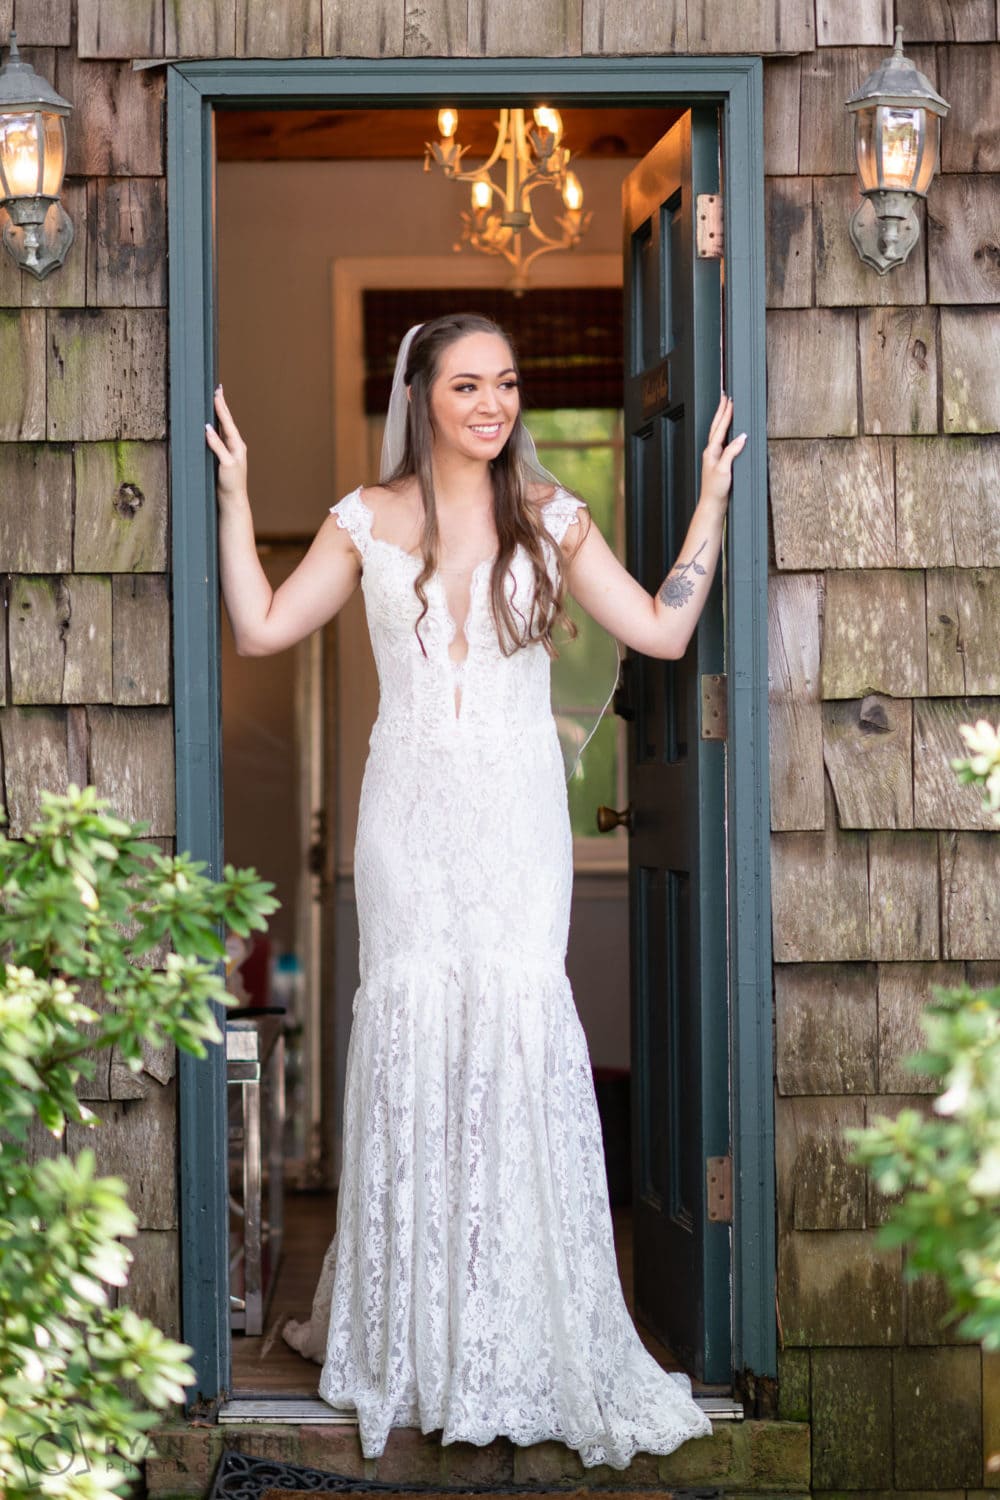 Bride standing in doorway - Magnolia Plantation - Charleston, SC